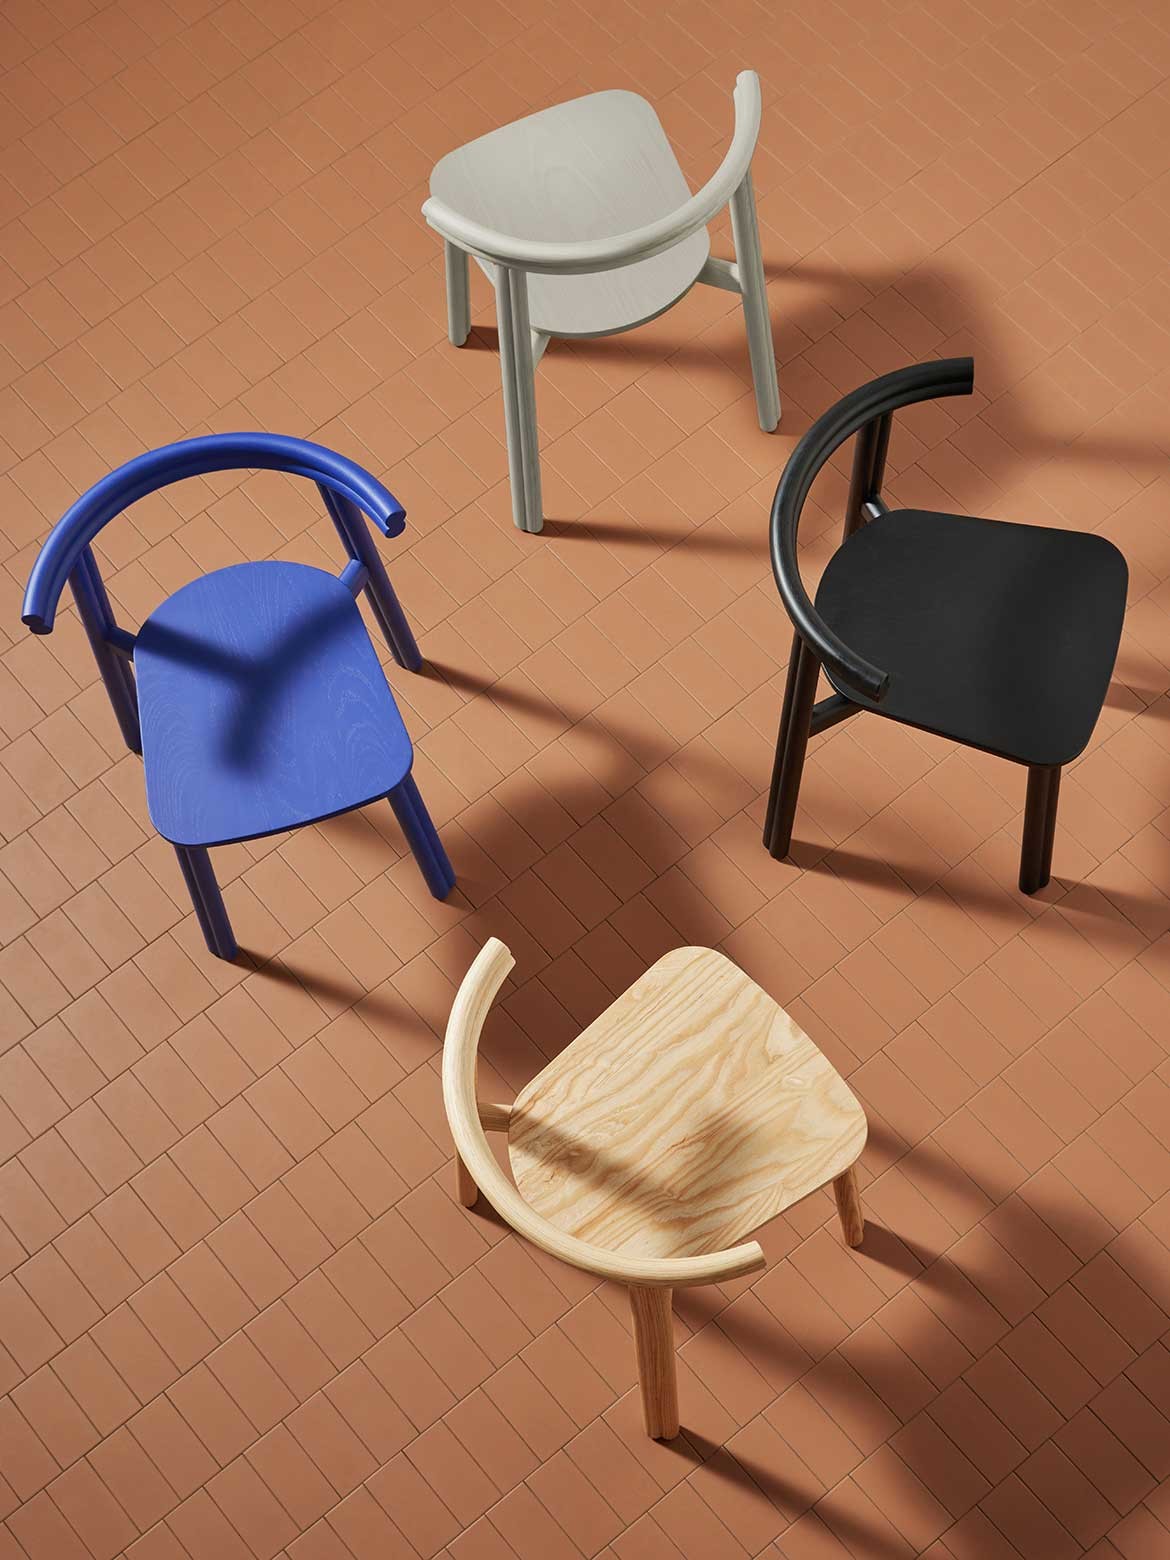 DesignByThem - A chair for your inner-child